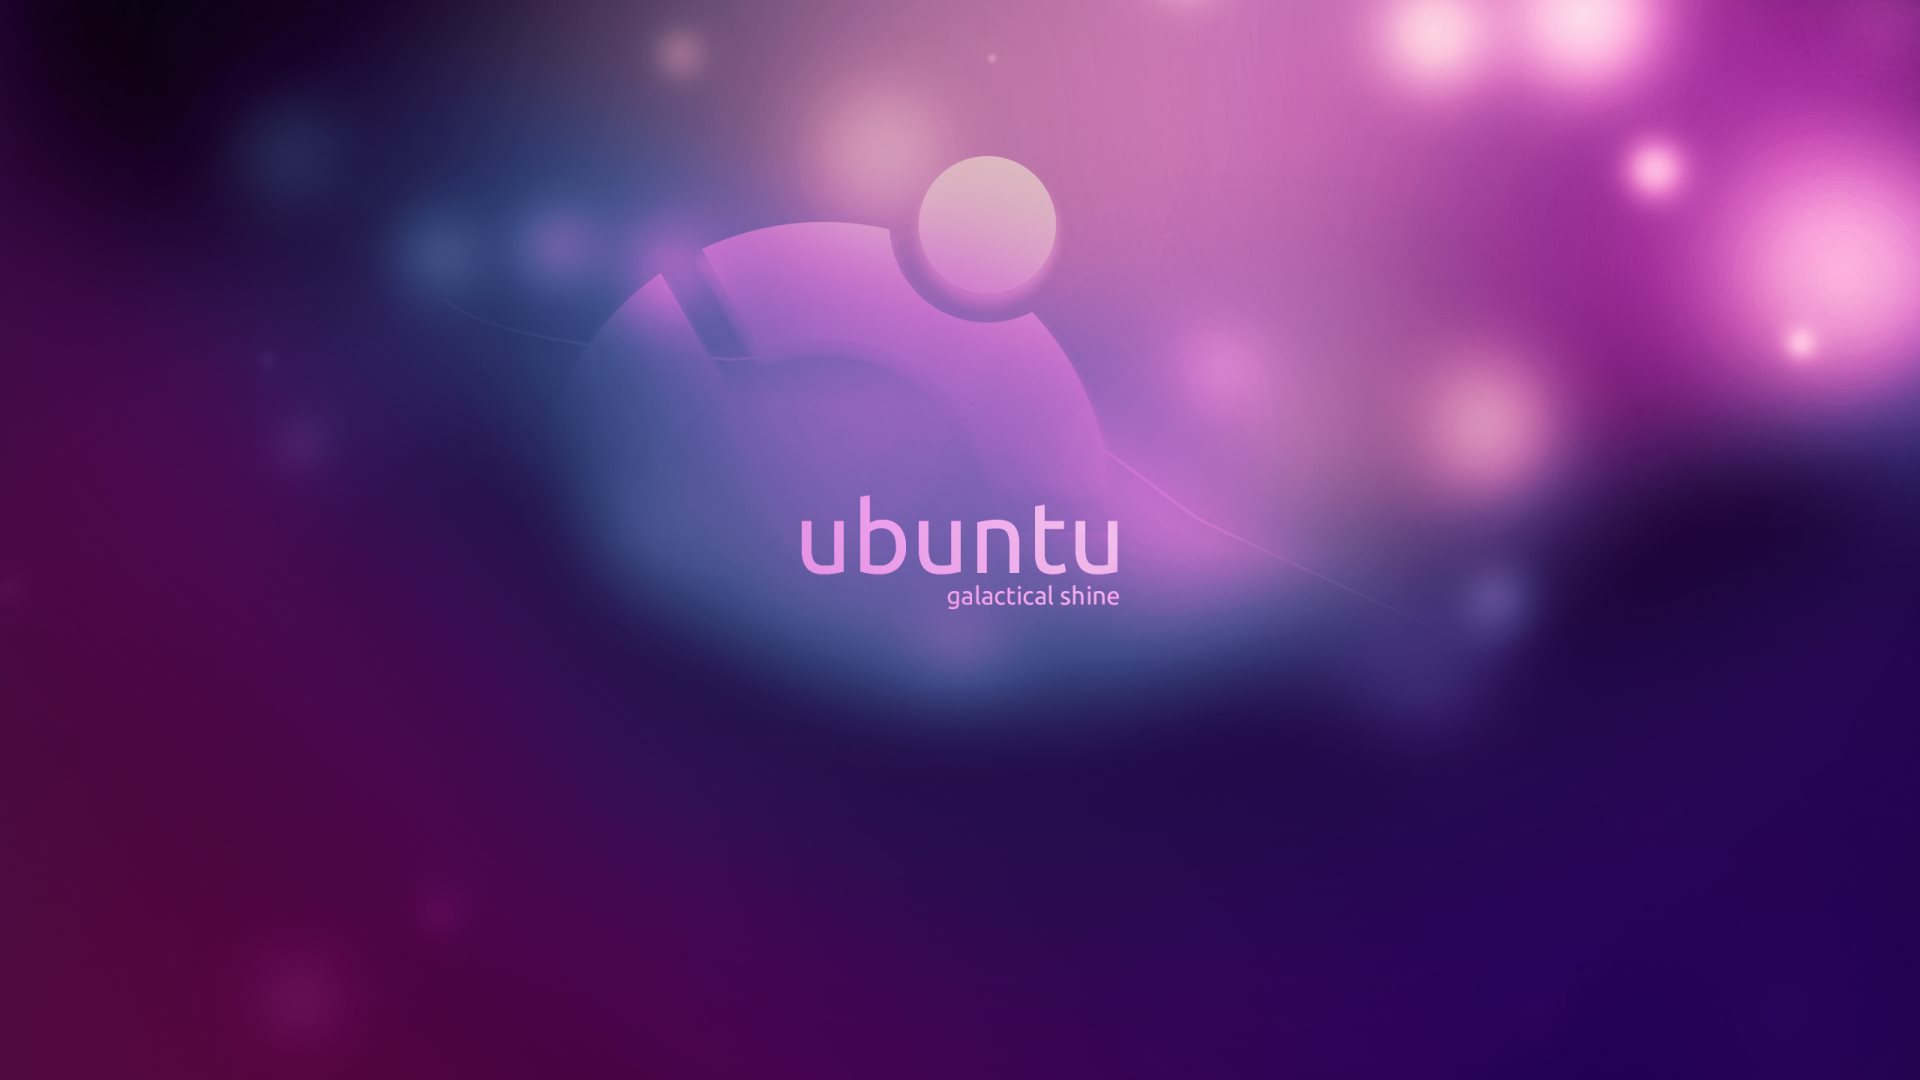 Best Ubuntu HD Wallpaper For Mytechshout